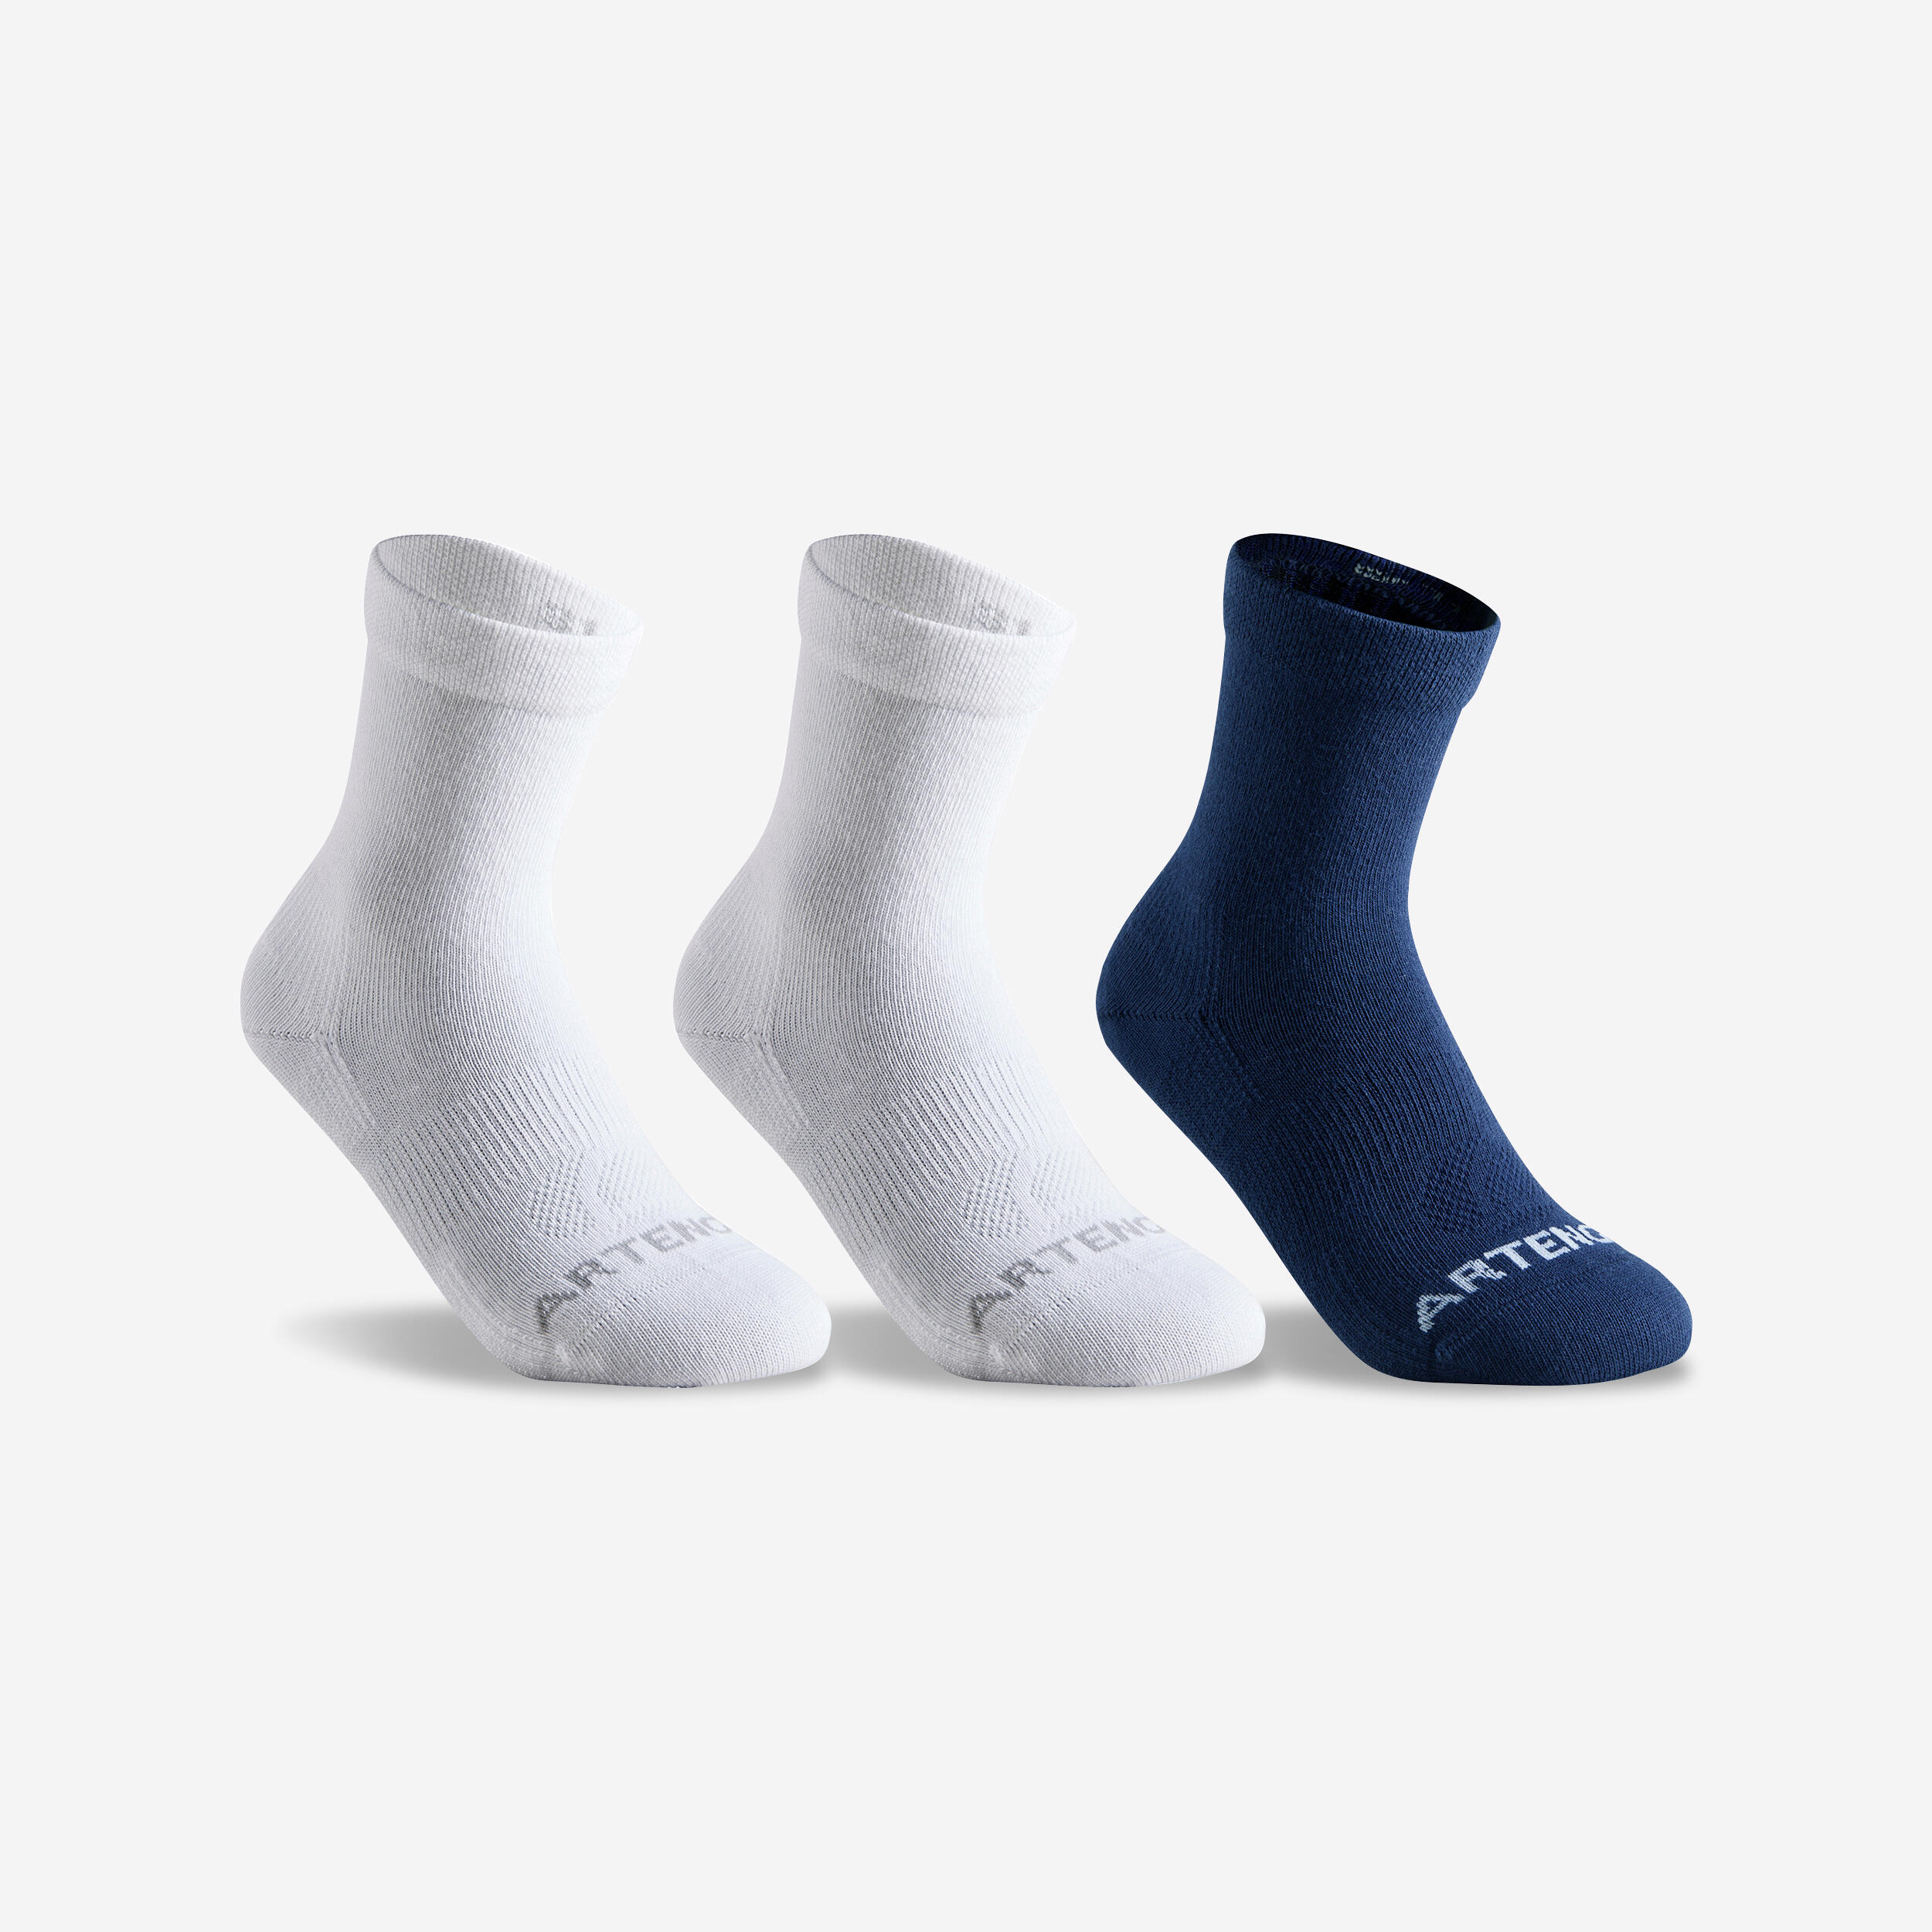 RS160 sports socks